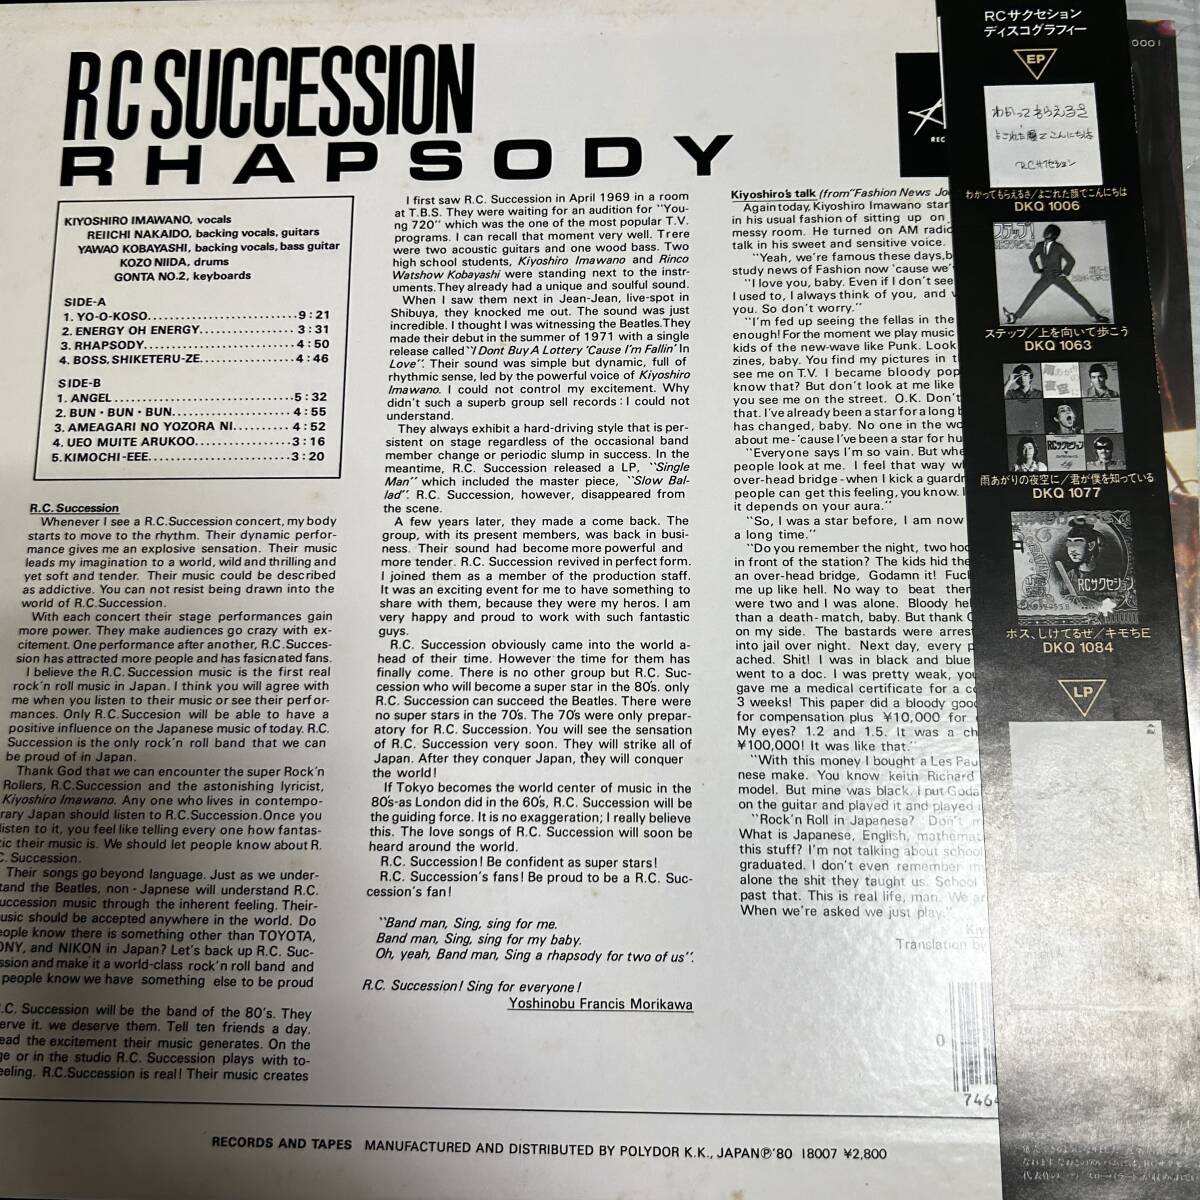  good record good jacket 1980 year RCsakseshonRC Succession LP record lapsoti-Rhapsody with belt J-Rock Imawano Kiyoshiro tea bo